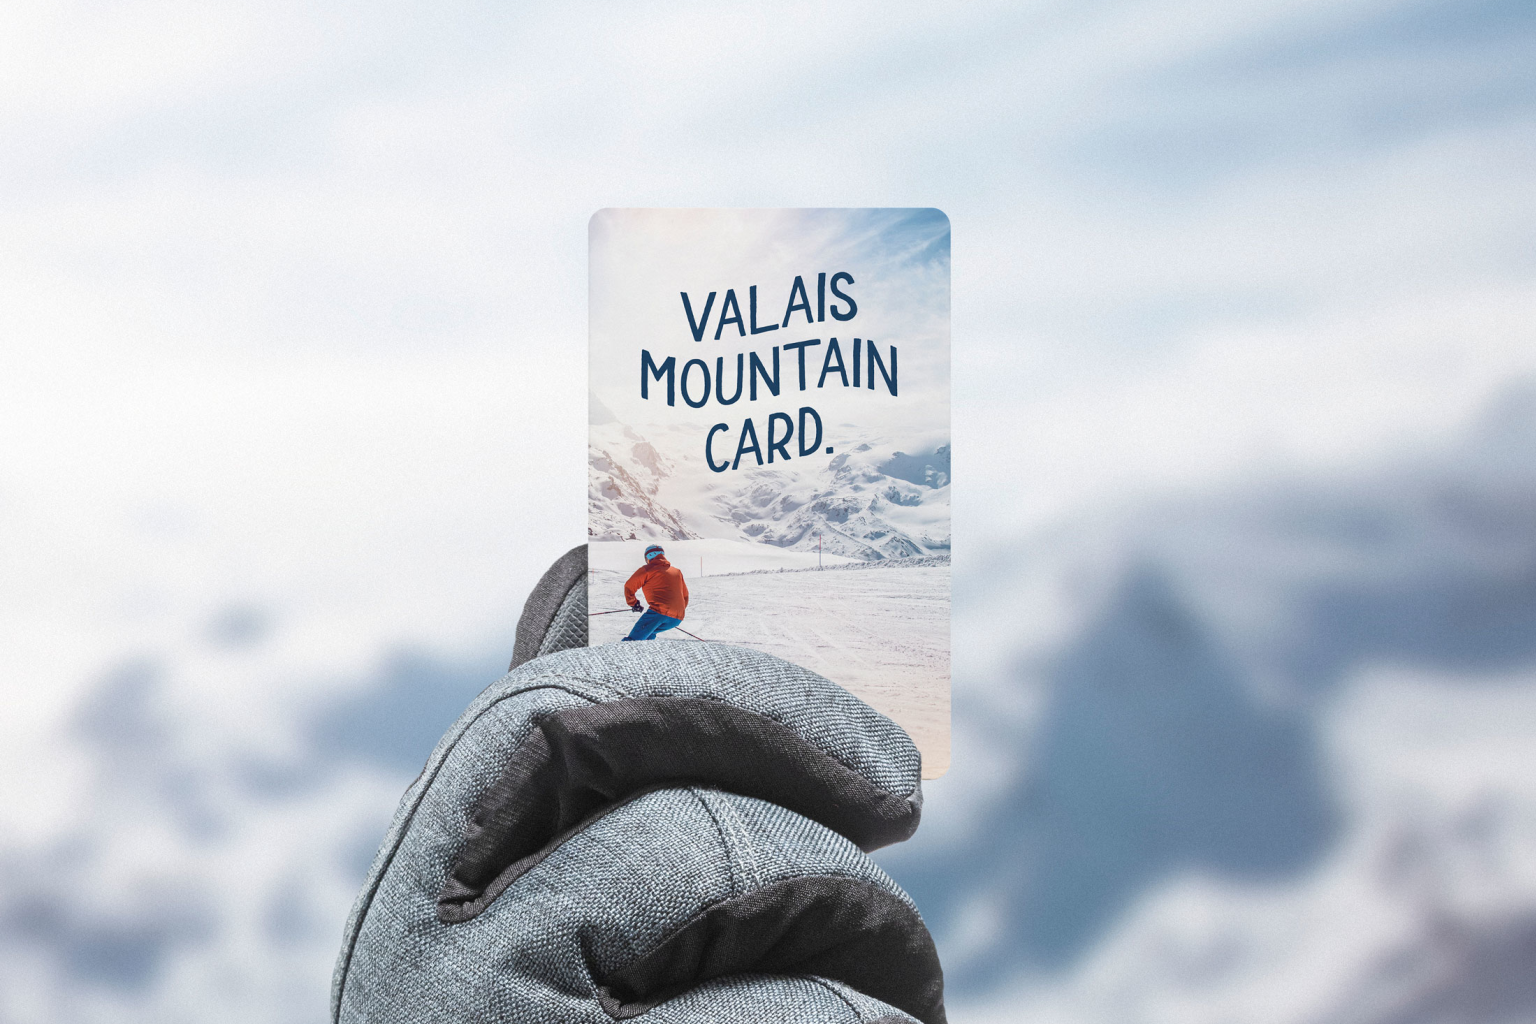 Hand with glove holding a ski pass, Valais, Switzerland